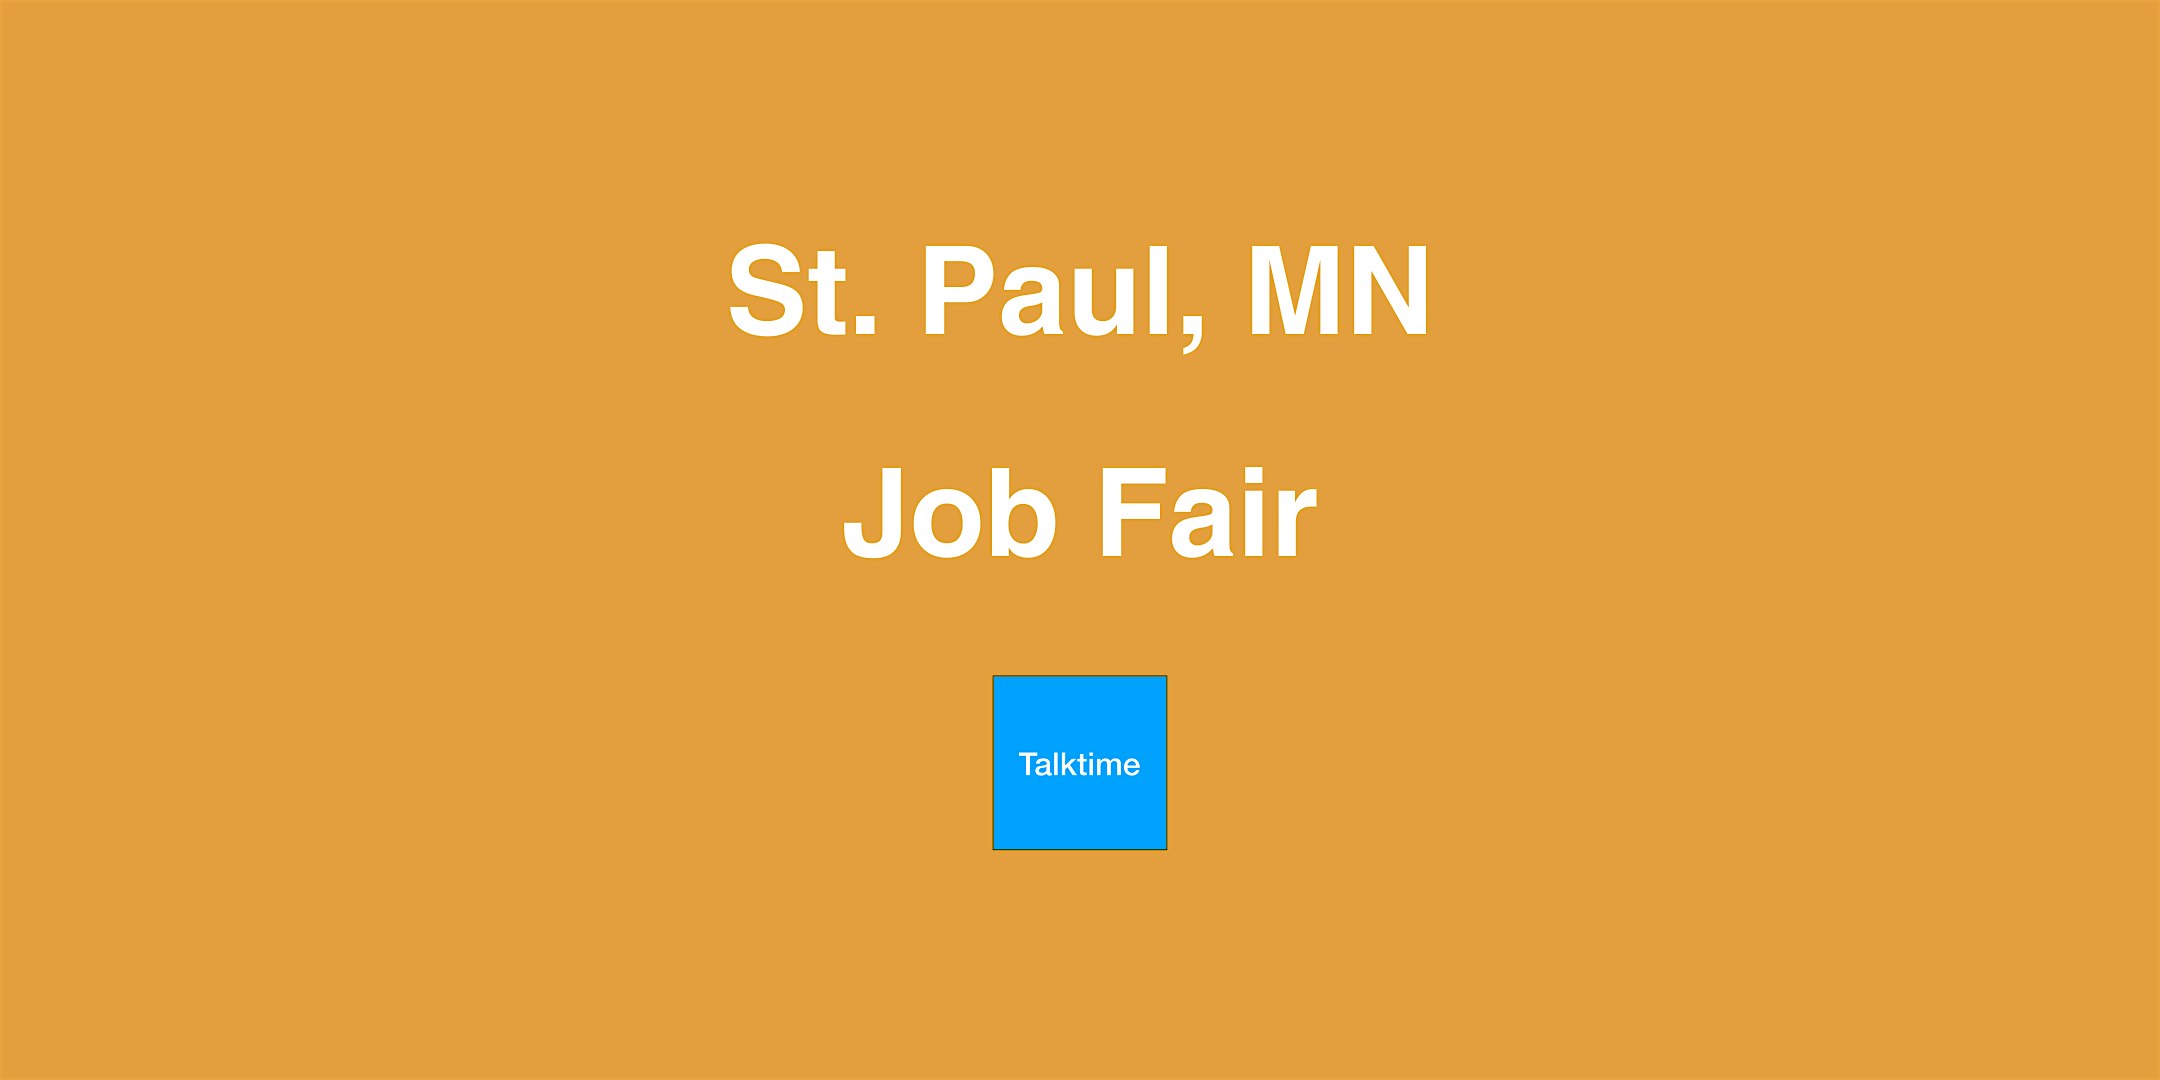 Job Fair - St. Paul